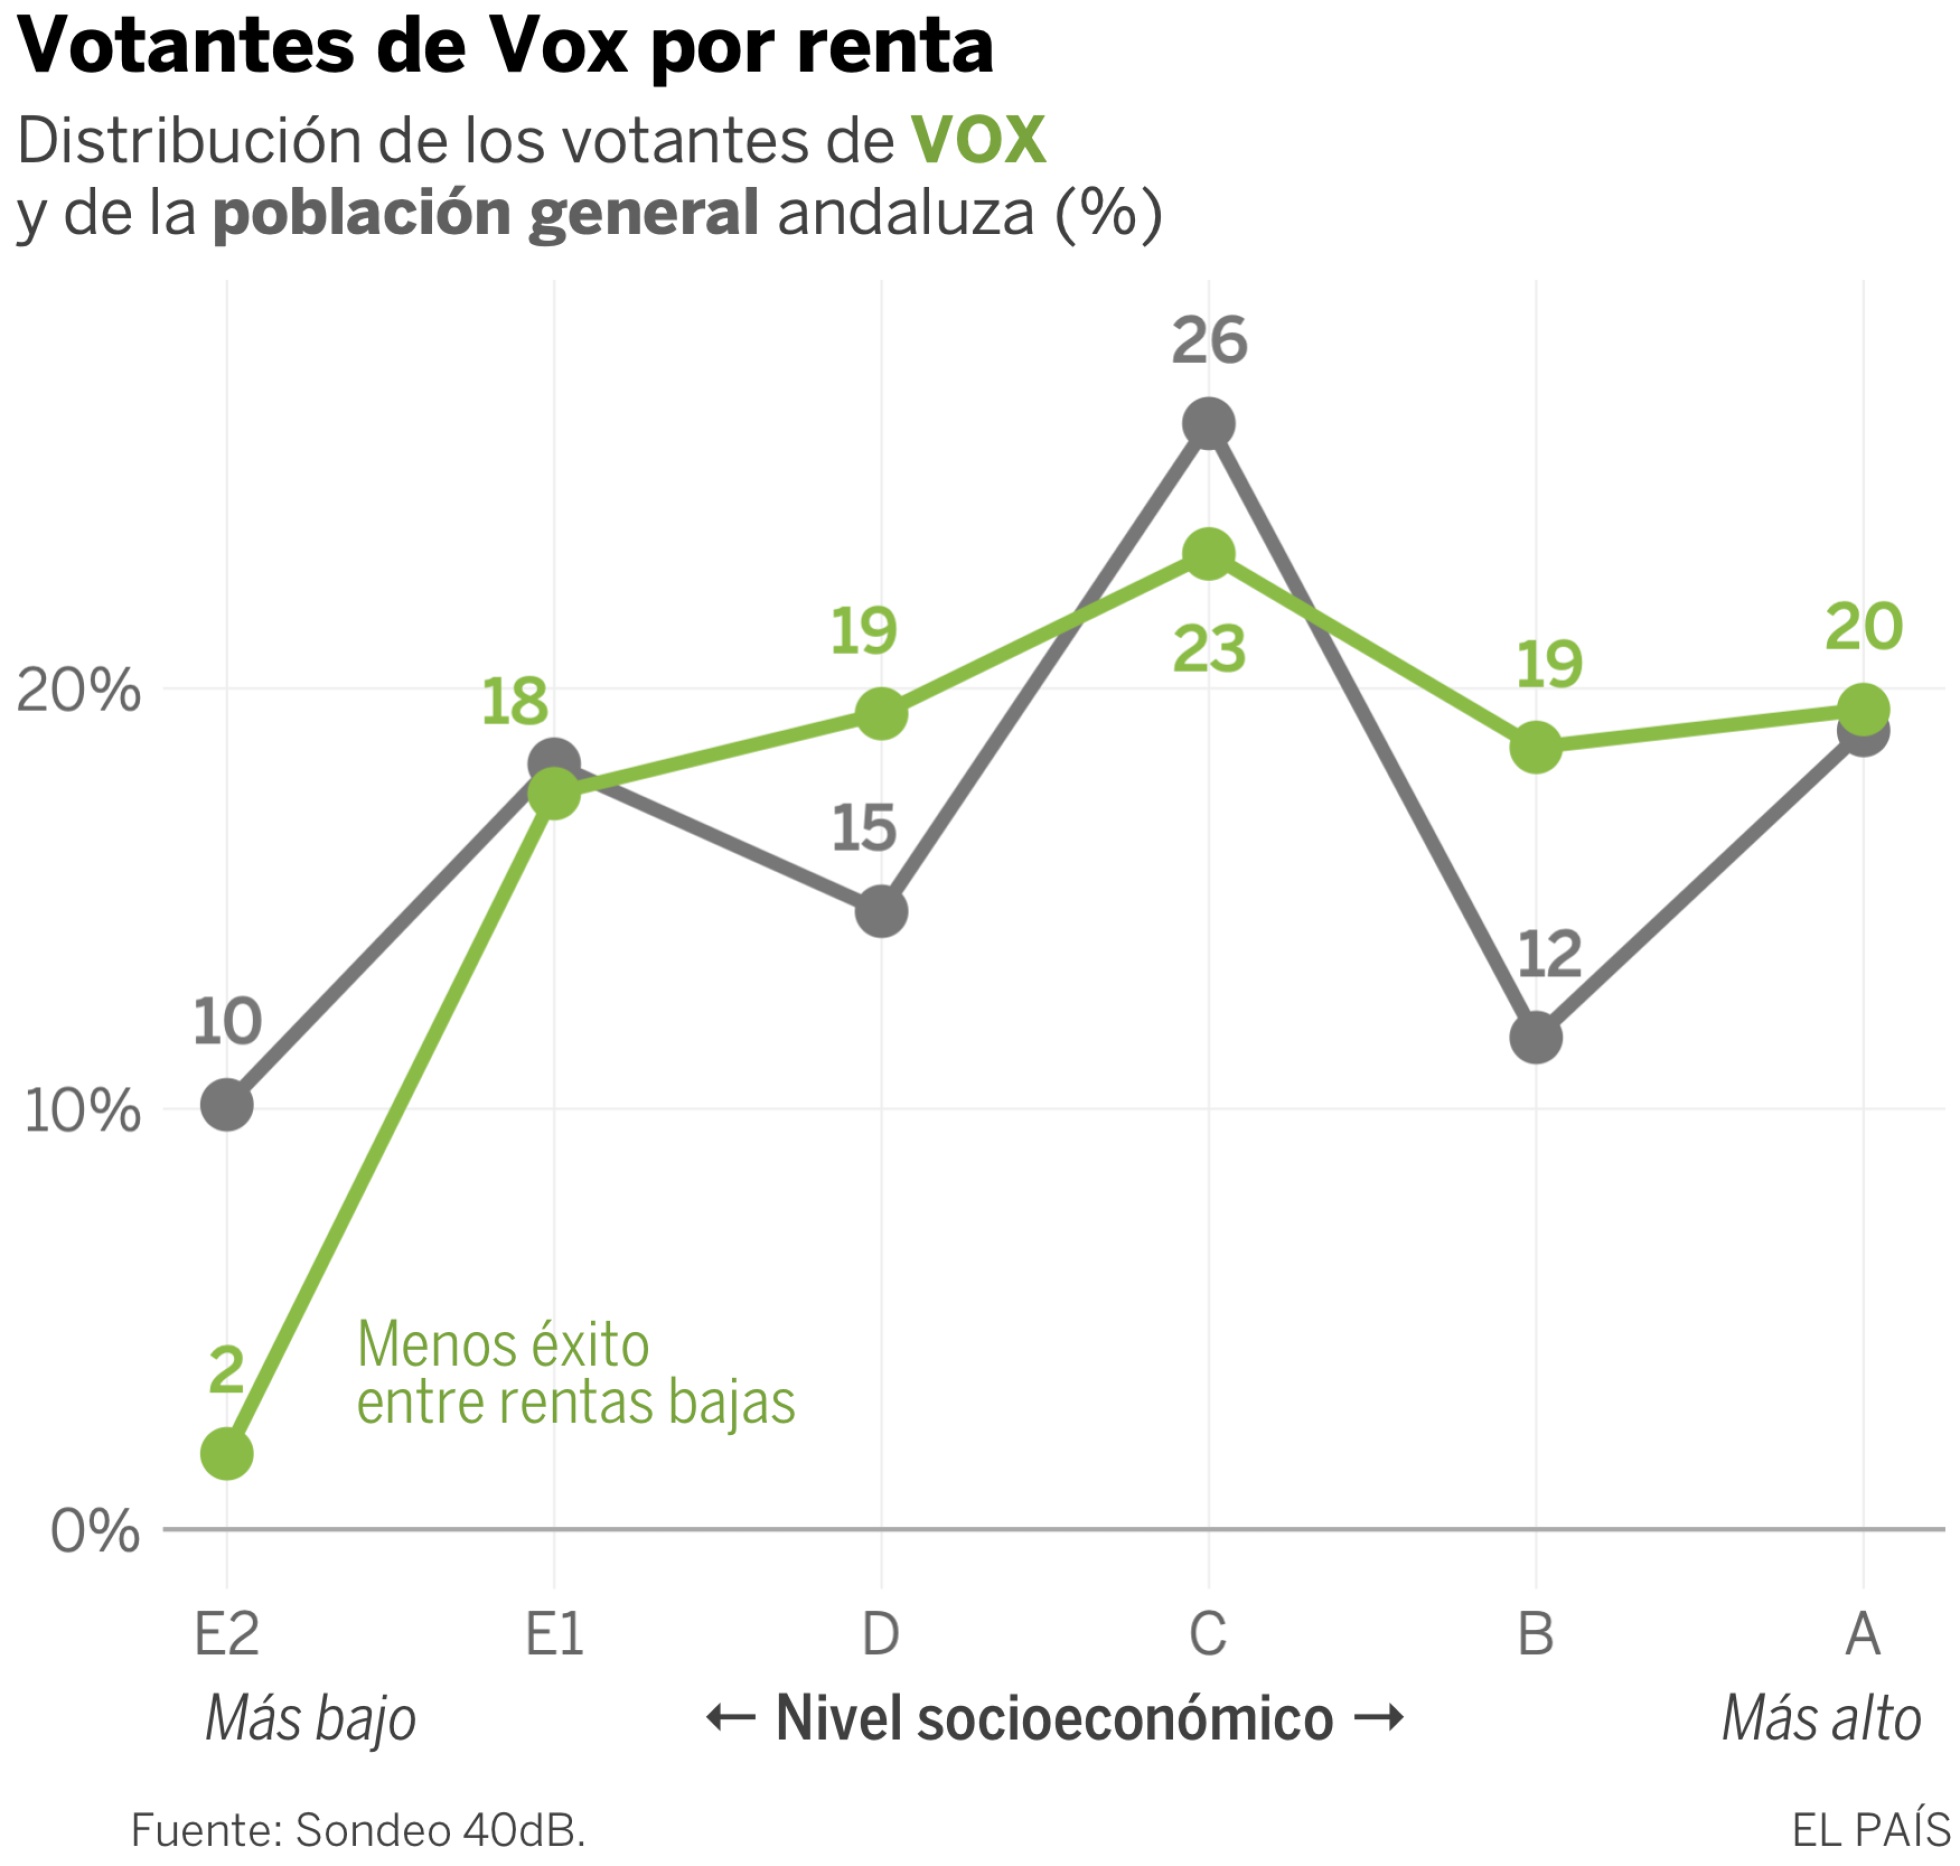 Perfil del votante de VOX en andalucia